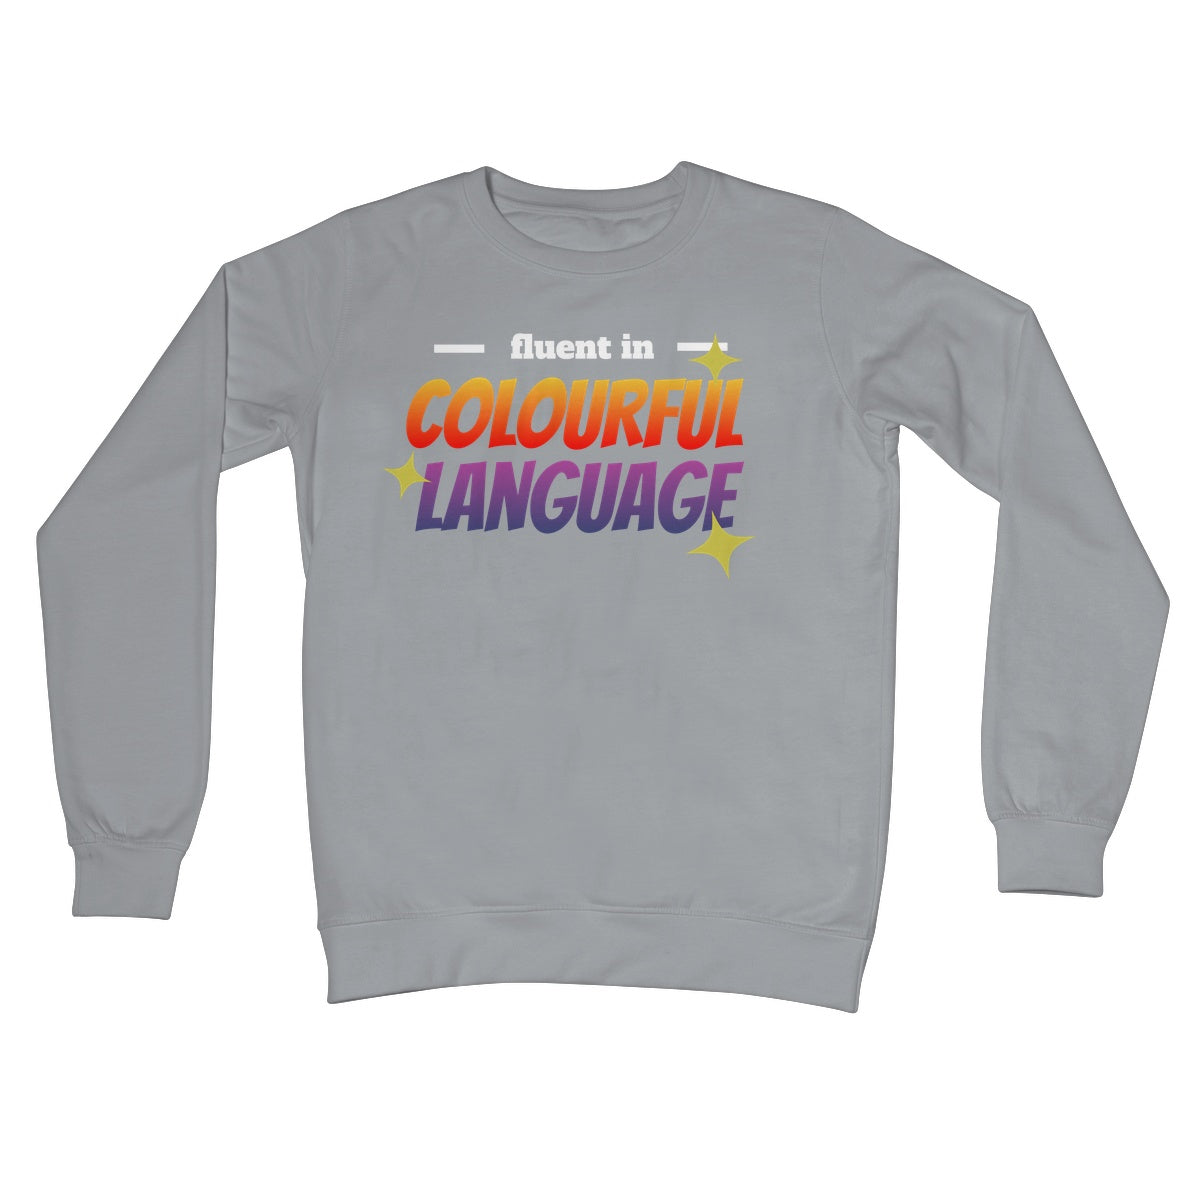 fluent in colourful language jumper grey